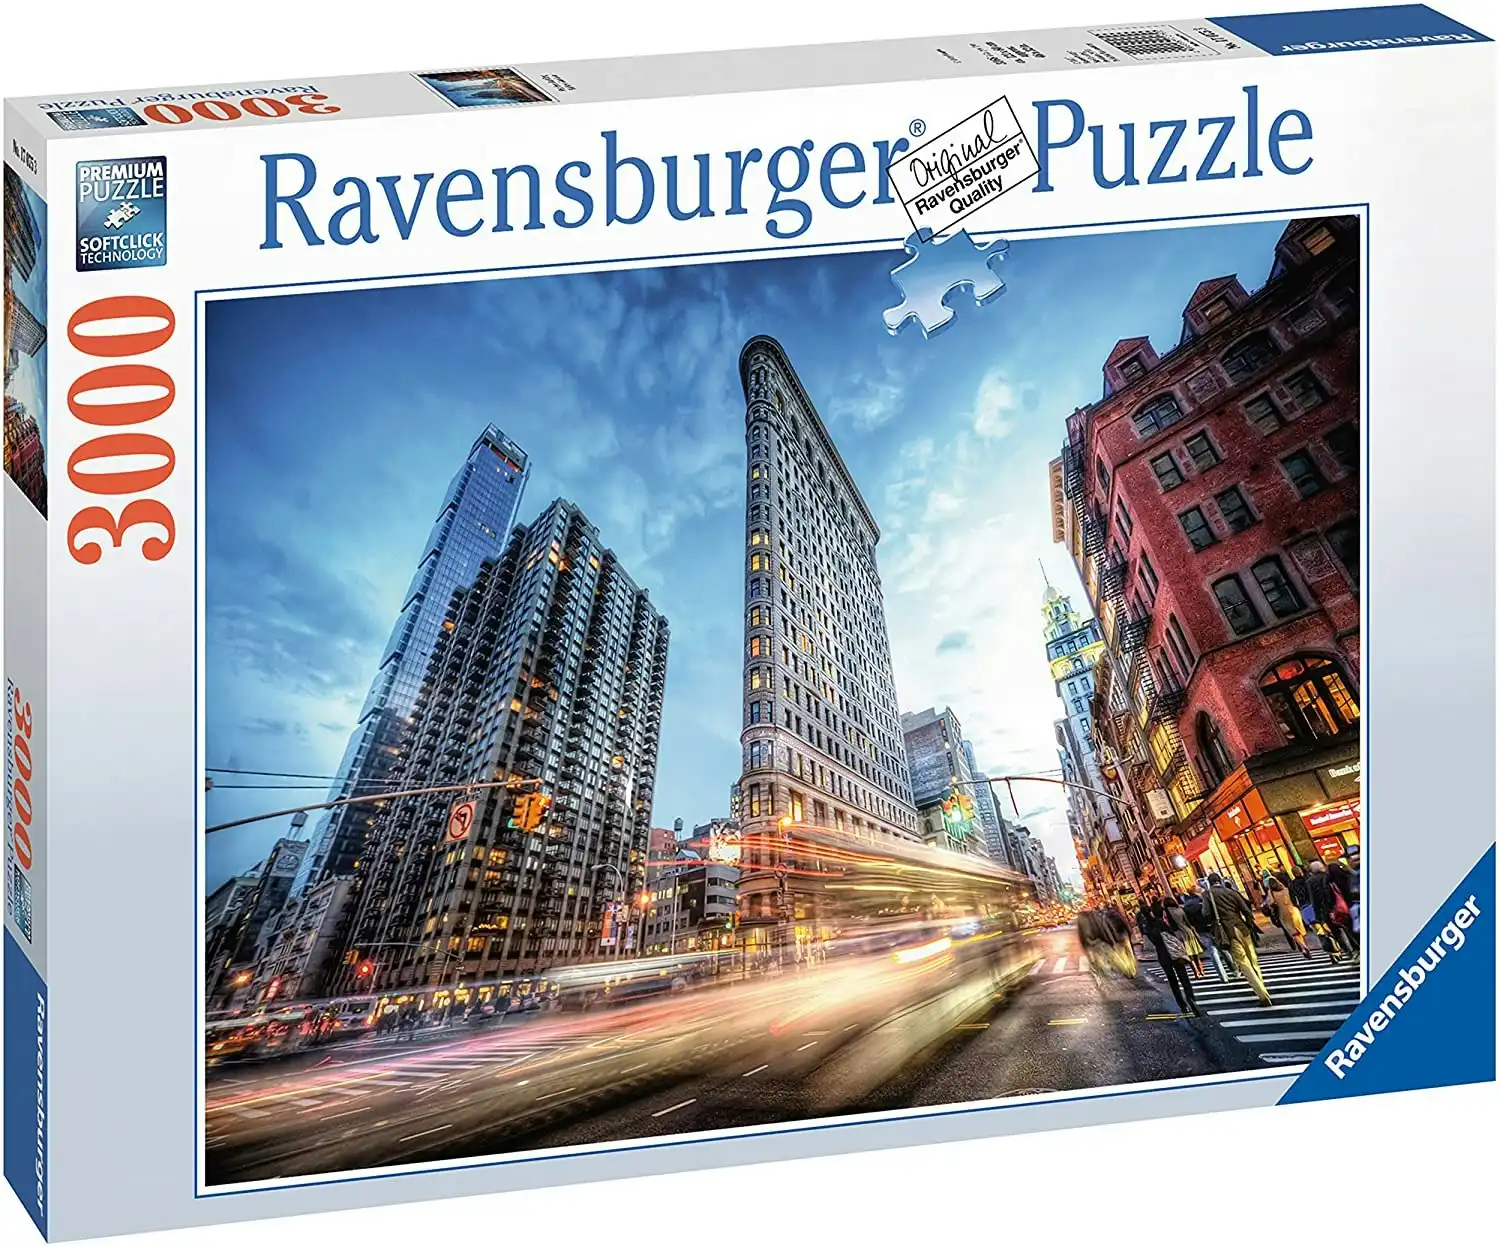 Ravensburger - Flat Iron Building Jigsaw Puzzle 3000 Pieces